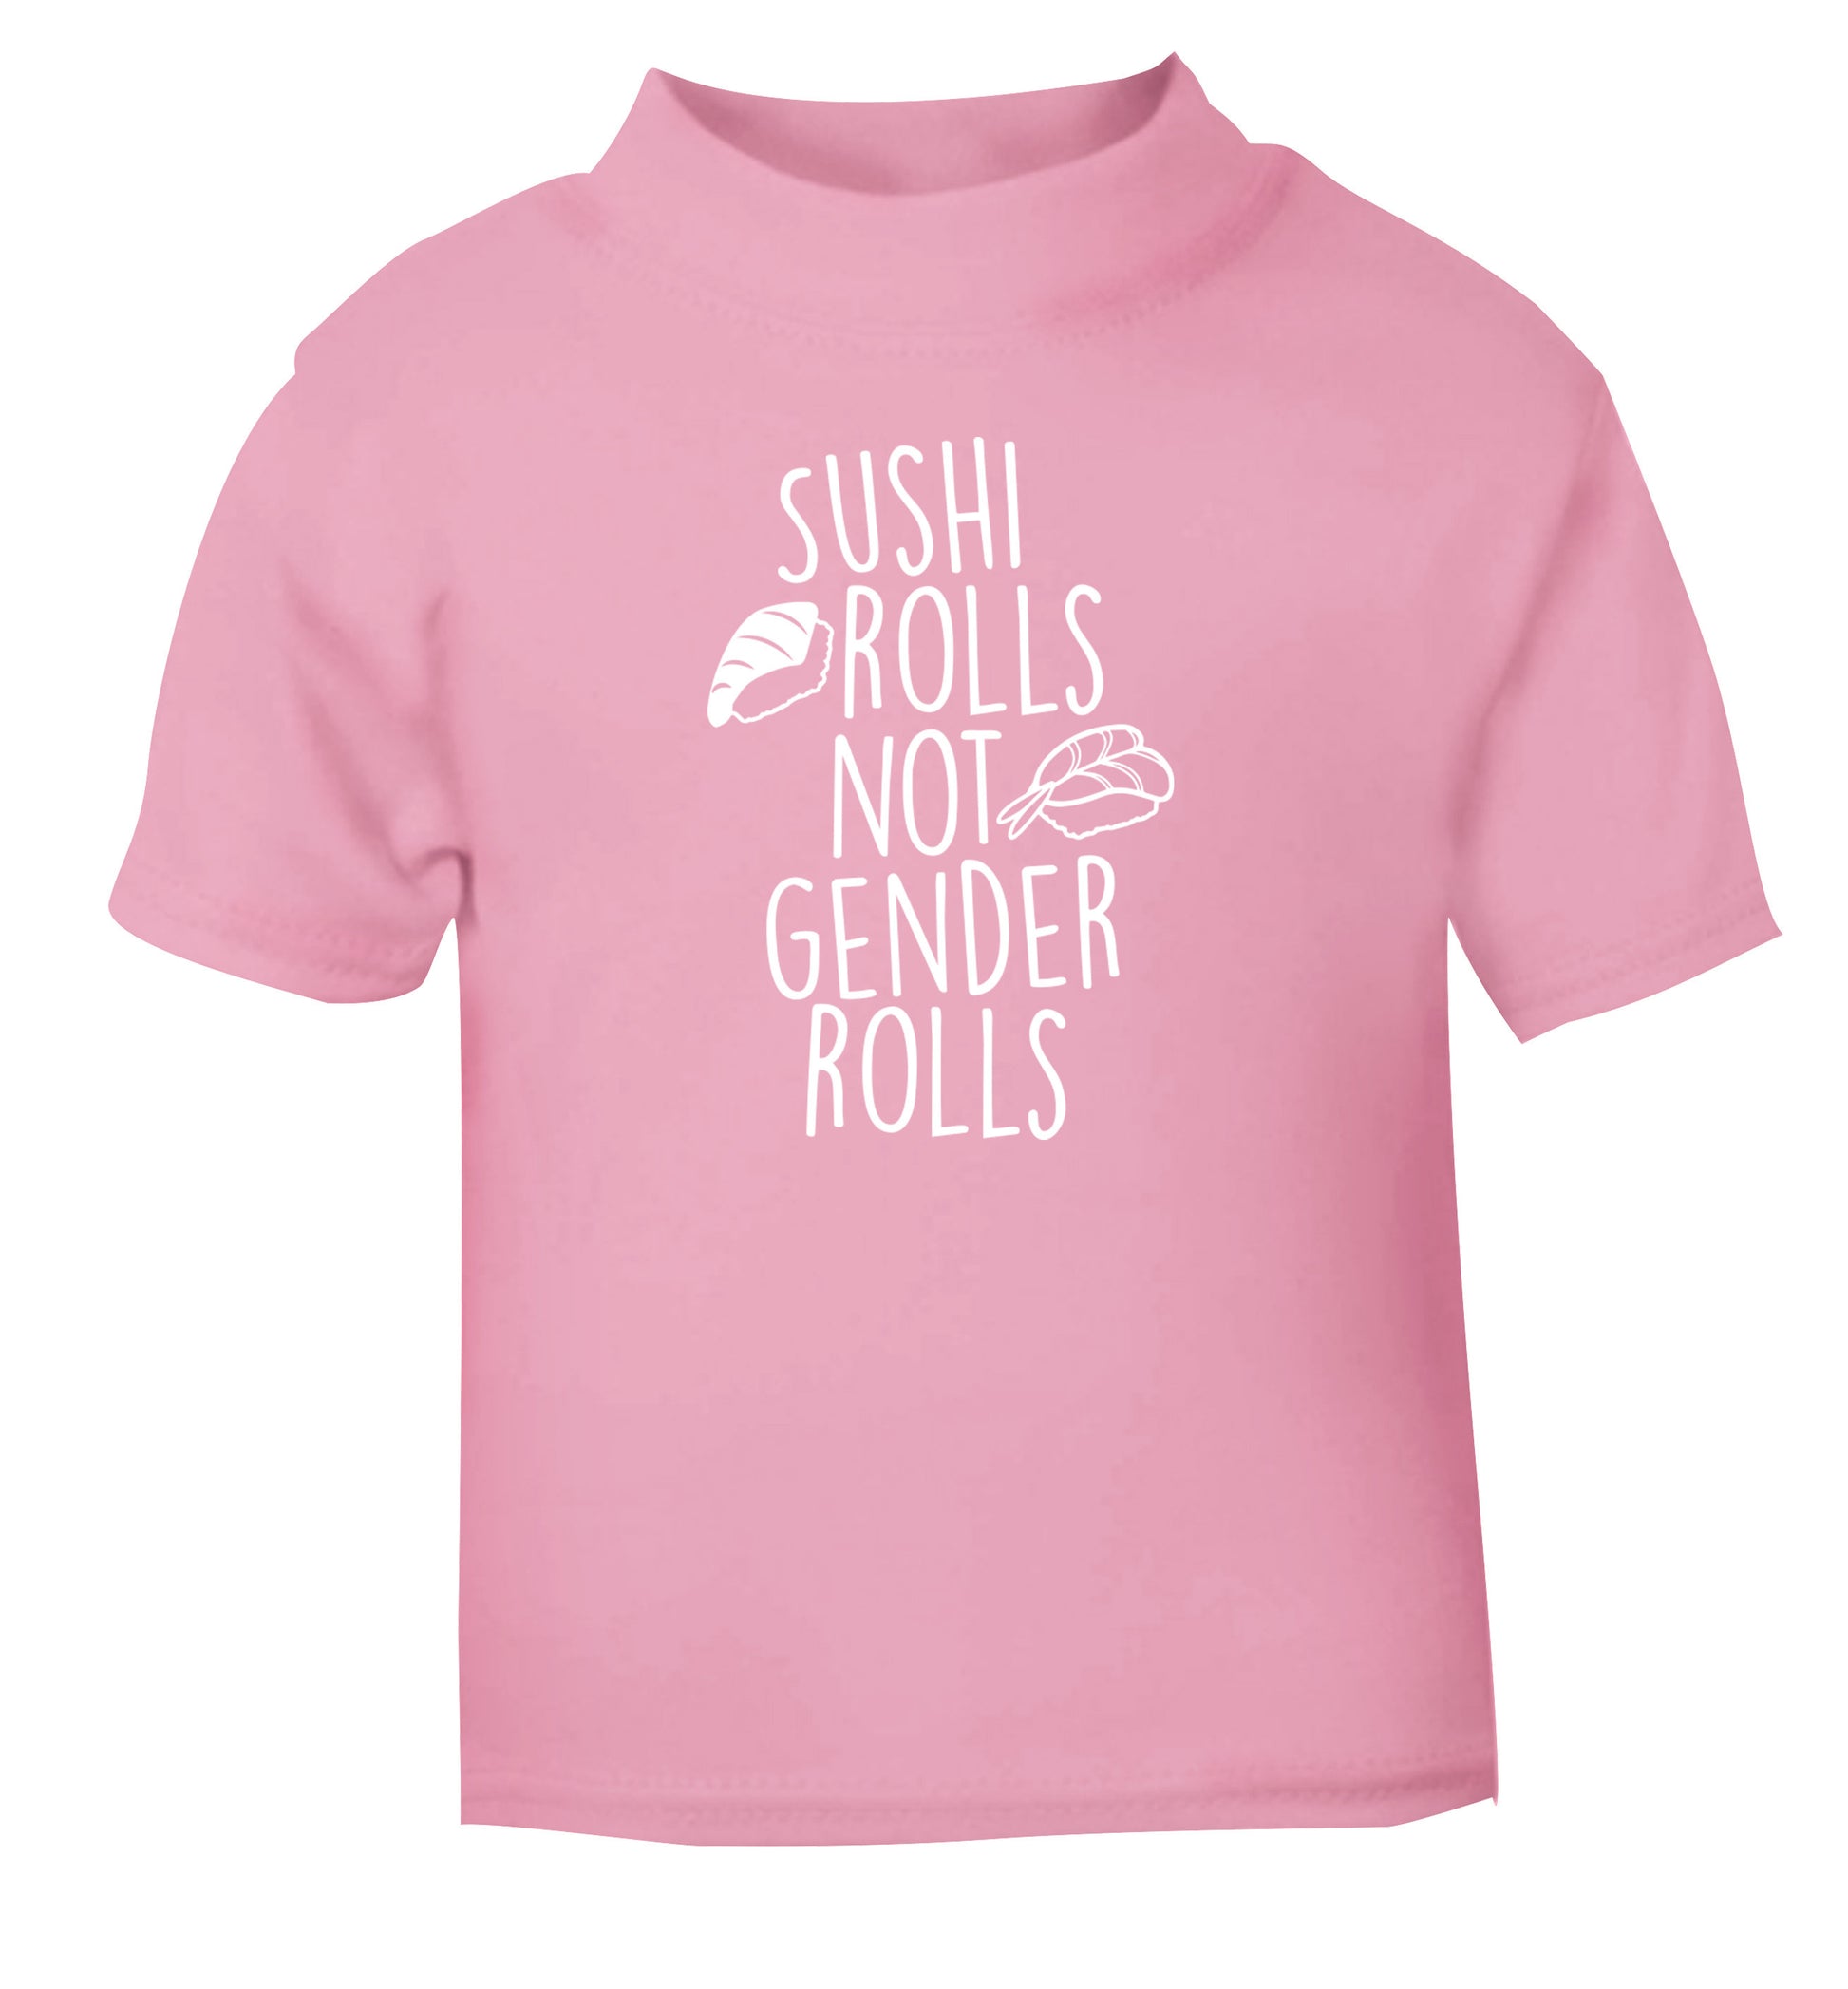 Sushi rolls not gender rolls light pink Baby Toddler Tshirt 2 Years